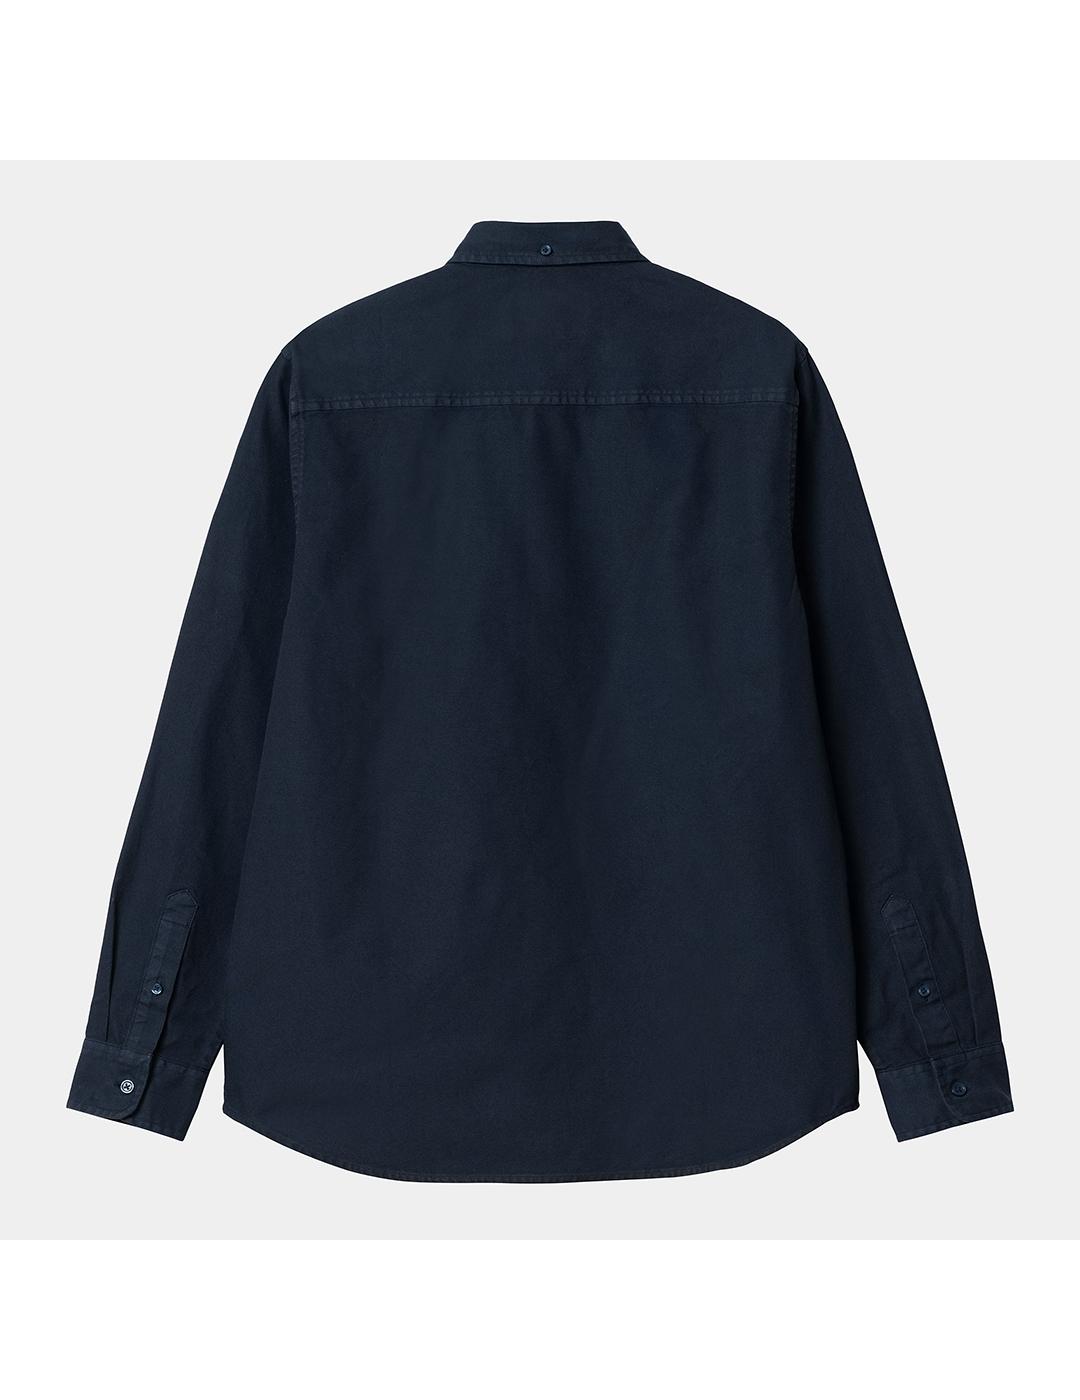 Camisa Carhartt Wip L/S Bolton blue garment dyed de hombre